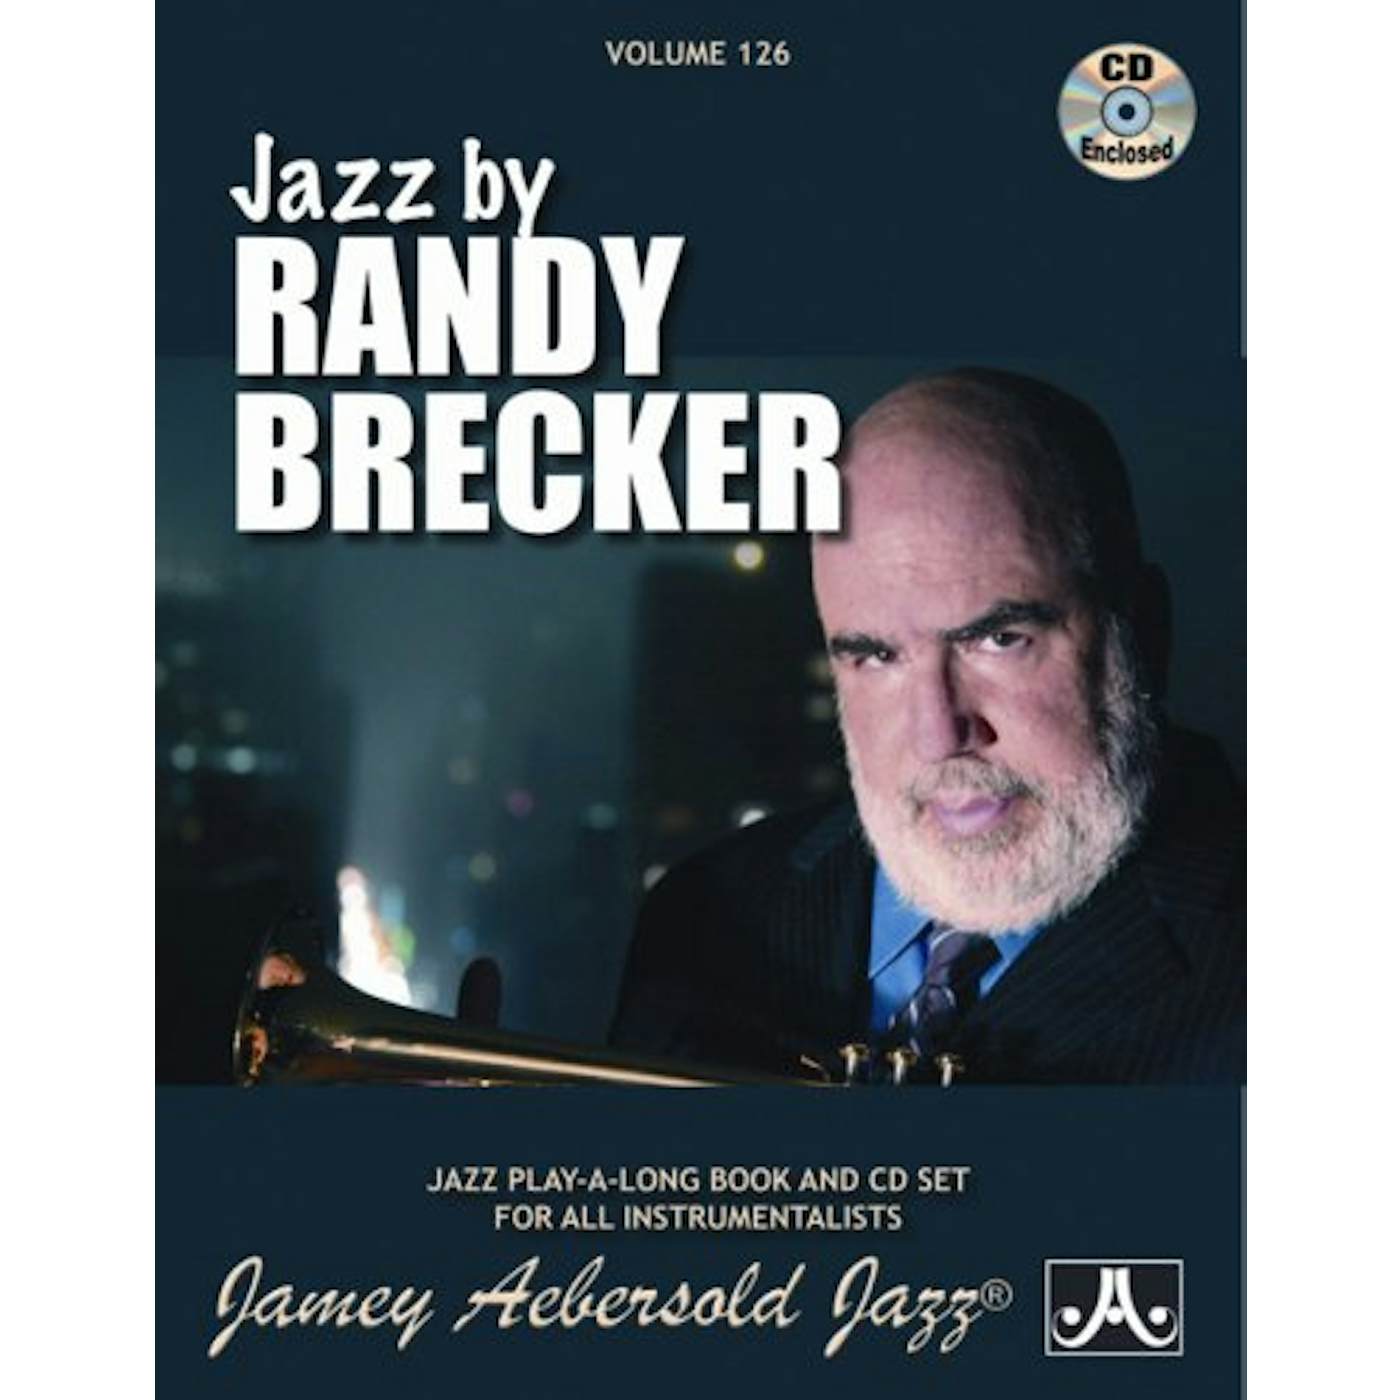 Jamey Aebersold RANDY BRECKER CD